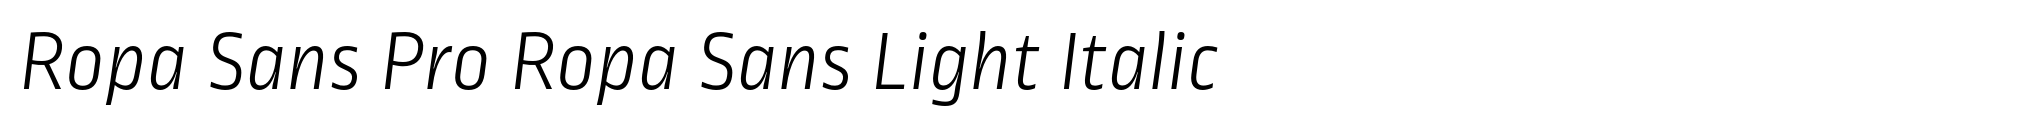 Ropa Sans Pro Ropa Sans Light Italic image